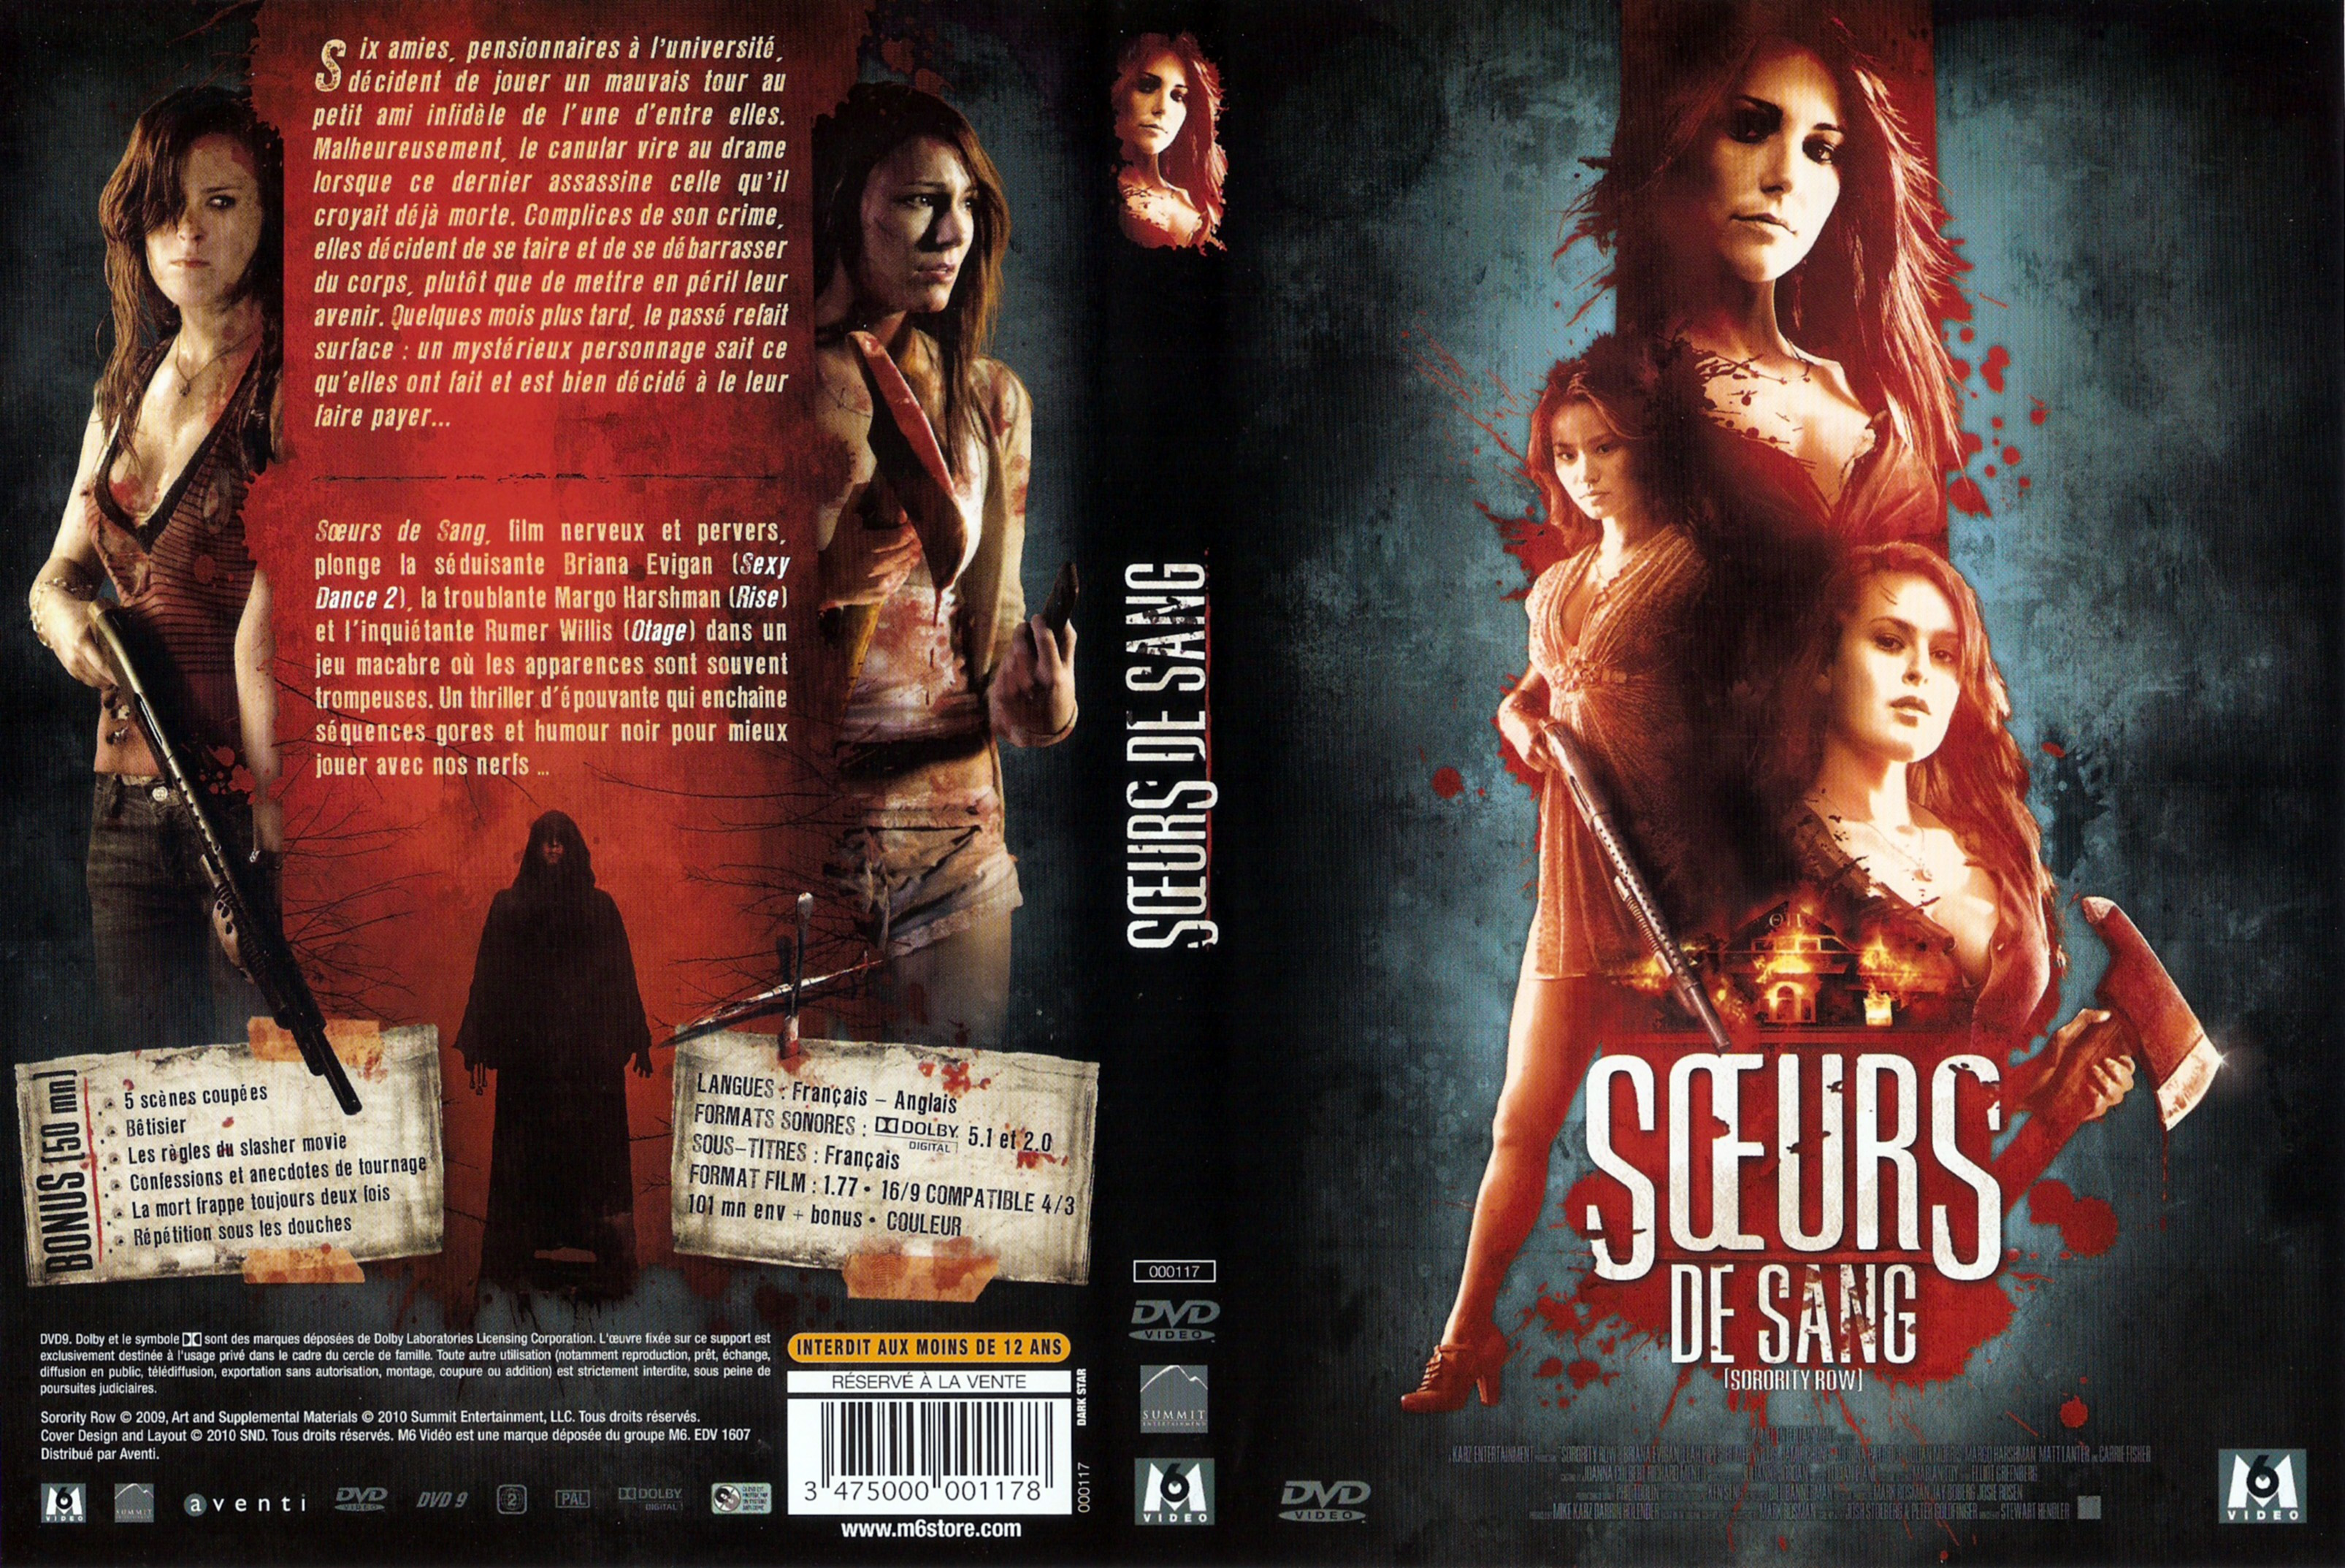 Jaquette DVD Soeurs de sang (2009)